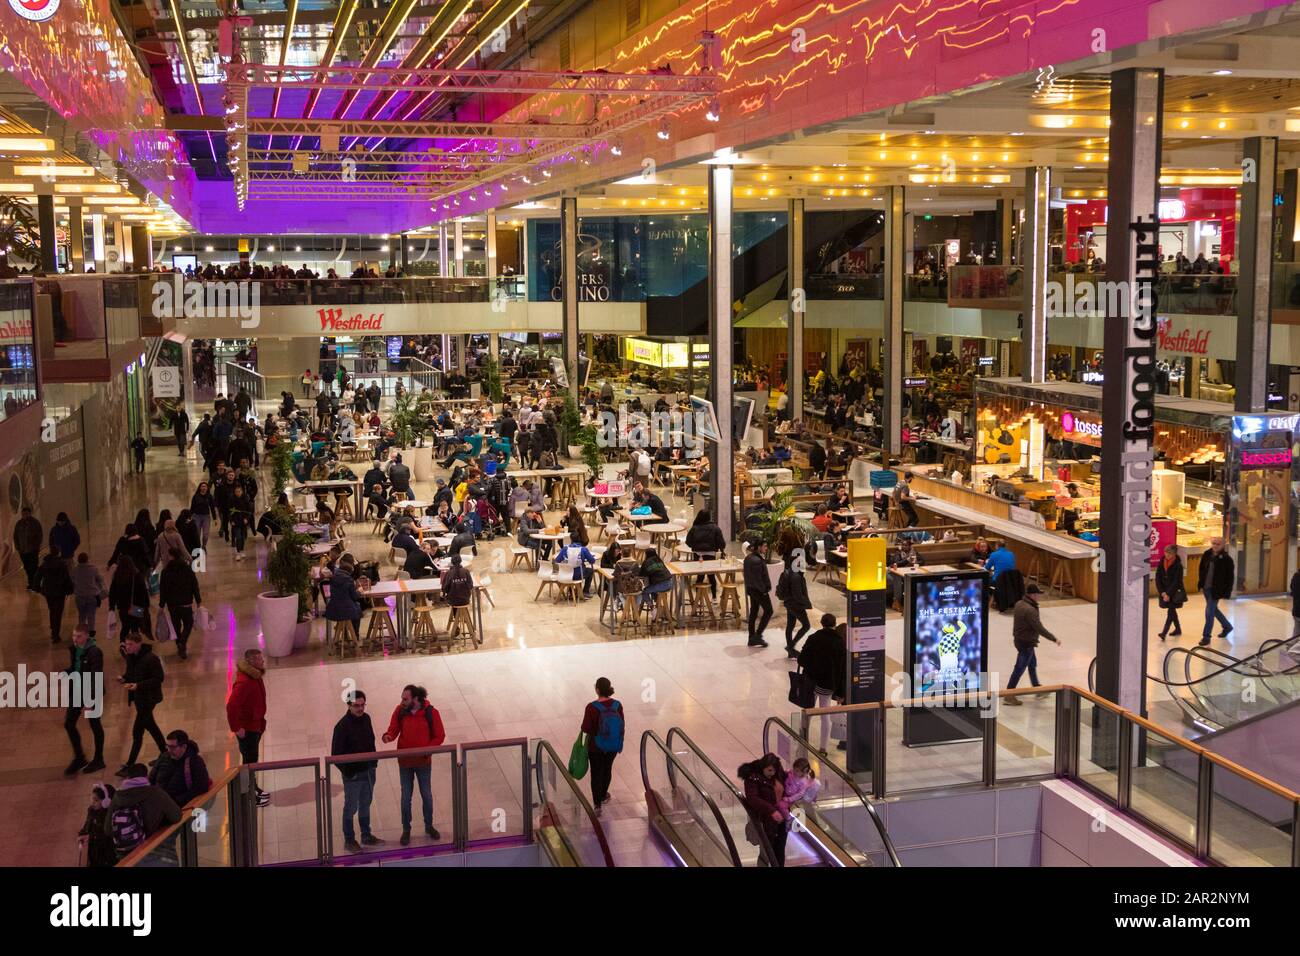 Westfield shopping centre interior, food court, stratford, london